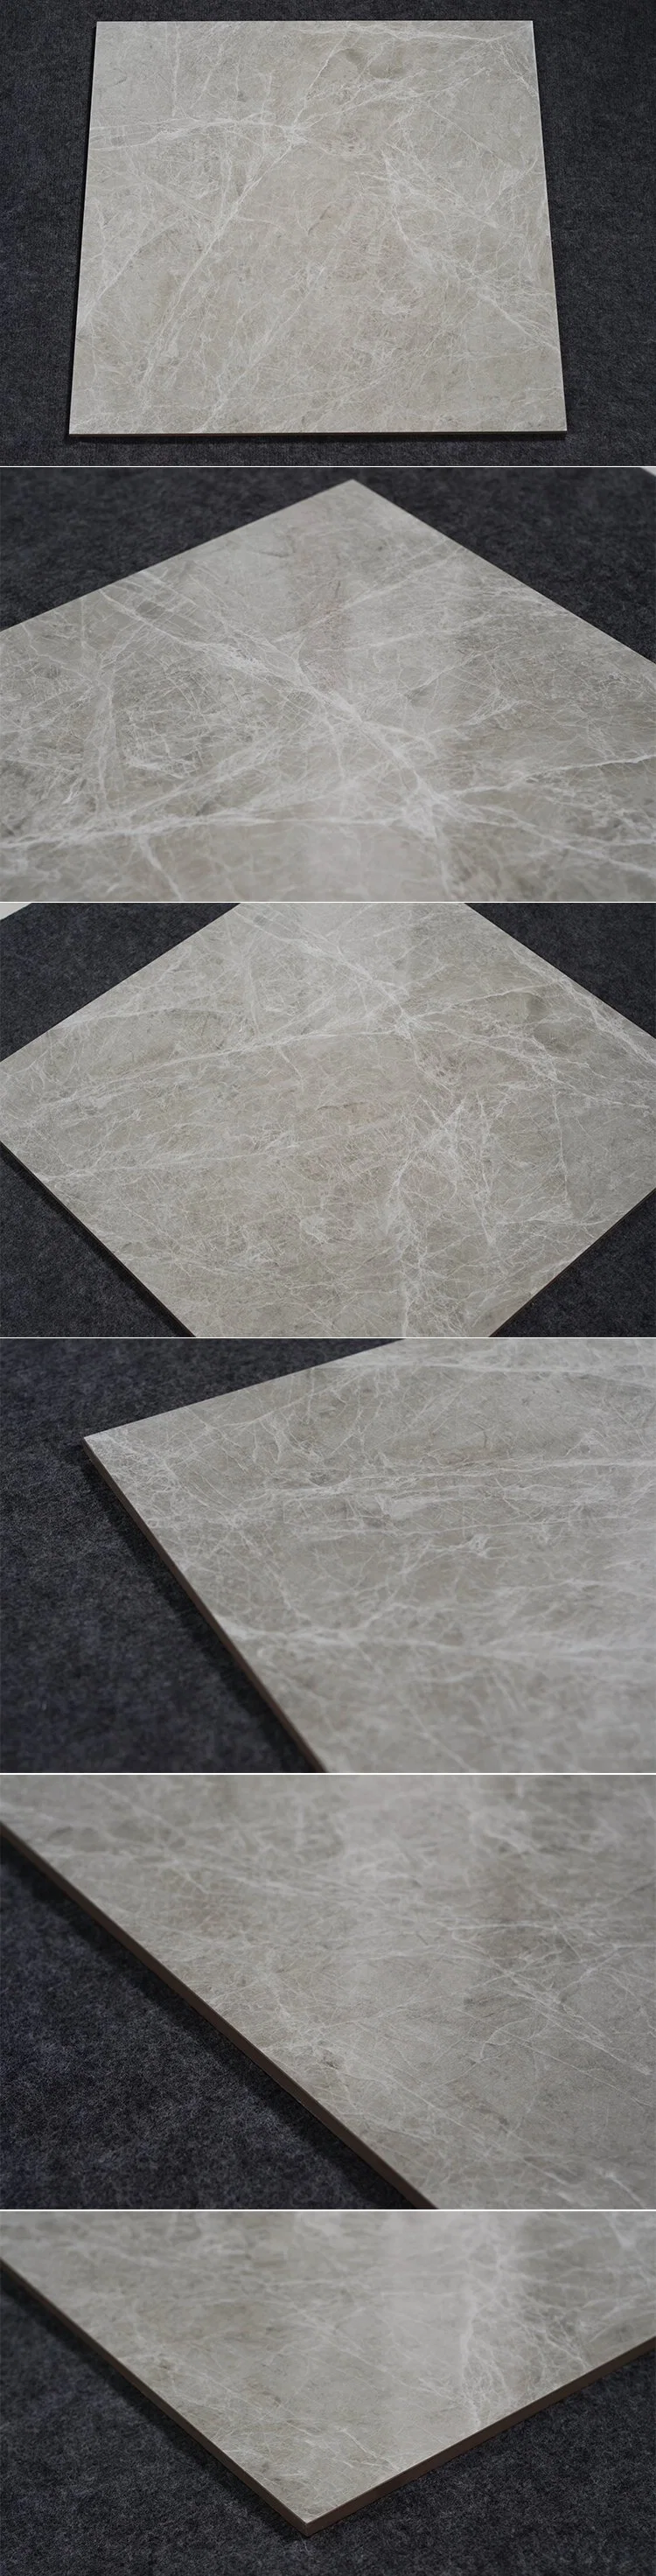 Portuguese Commercial Kitchen Floor Grey Stone Tile Backsplash